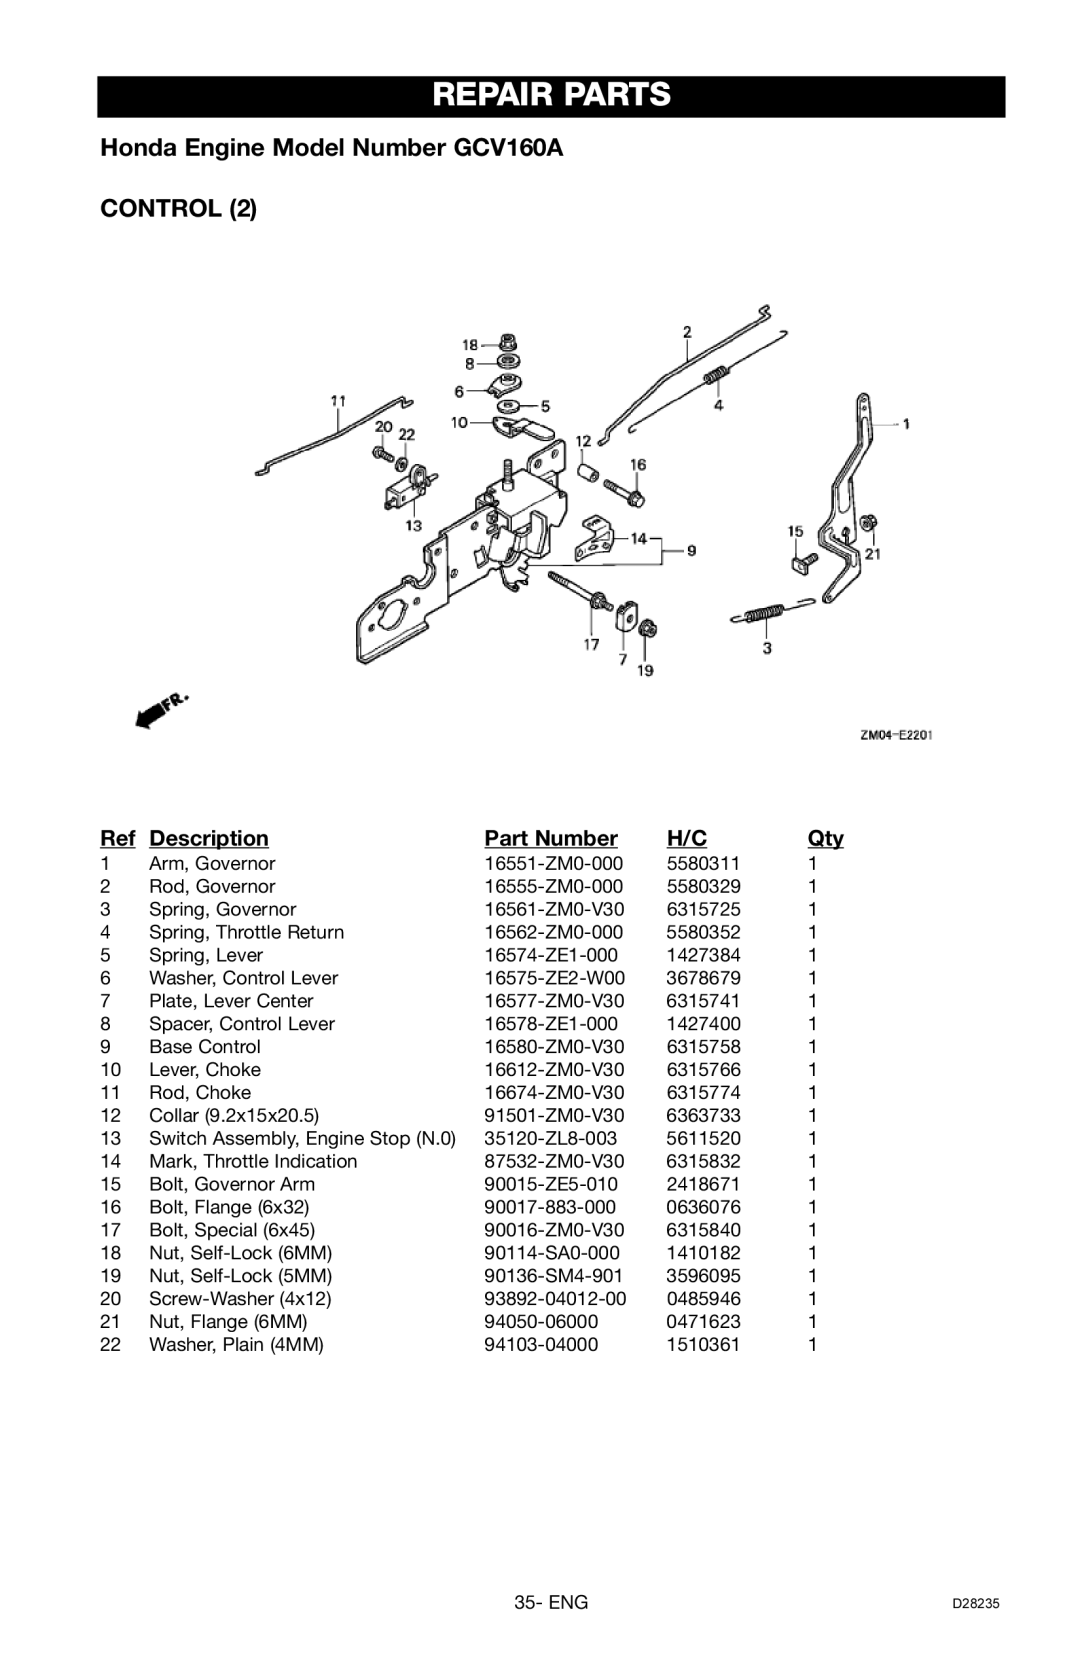 Craftsman 919.672241, D28235 owner manual Repair Parts, Honda Engine Model Number GCV160A CONTROL, Description, Part Number 